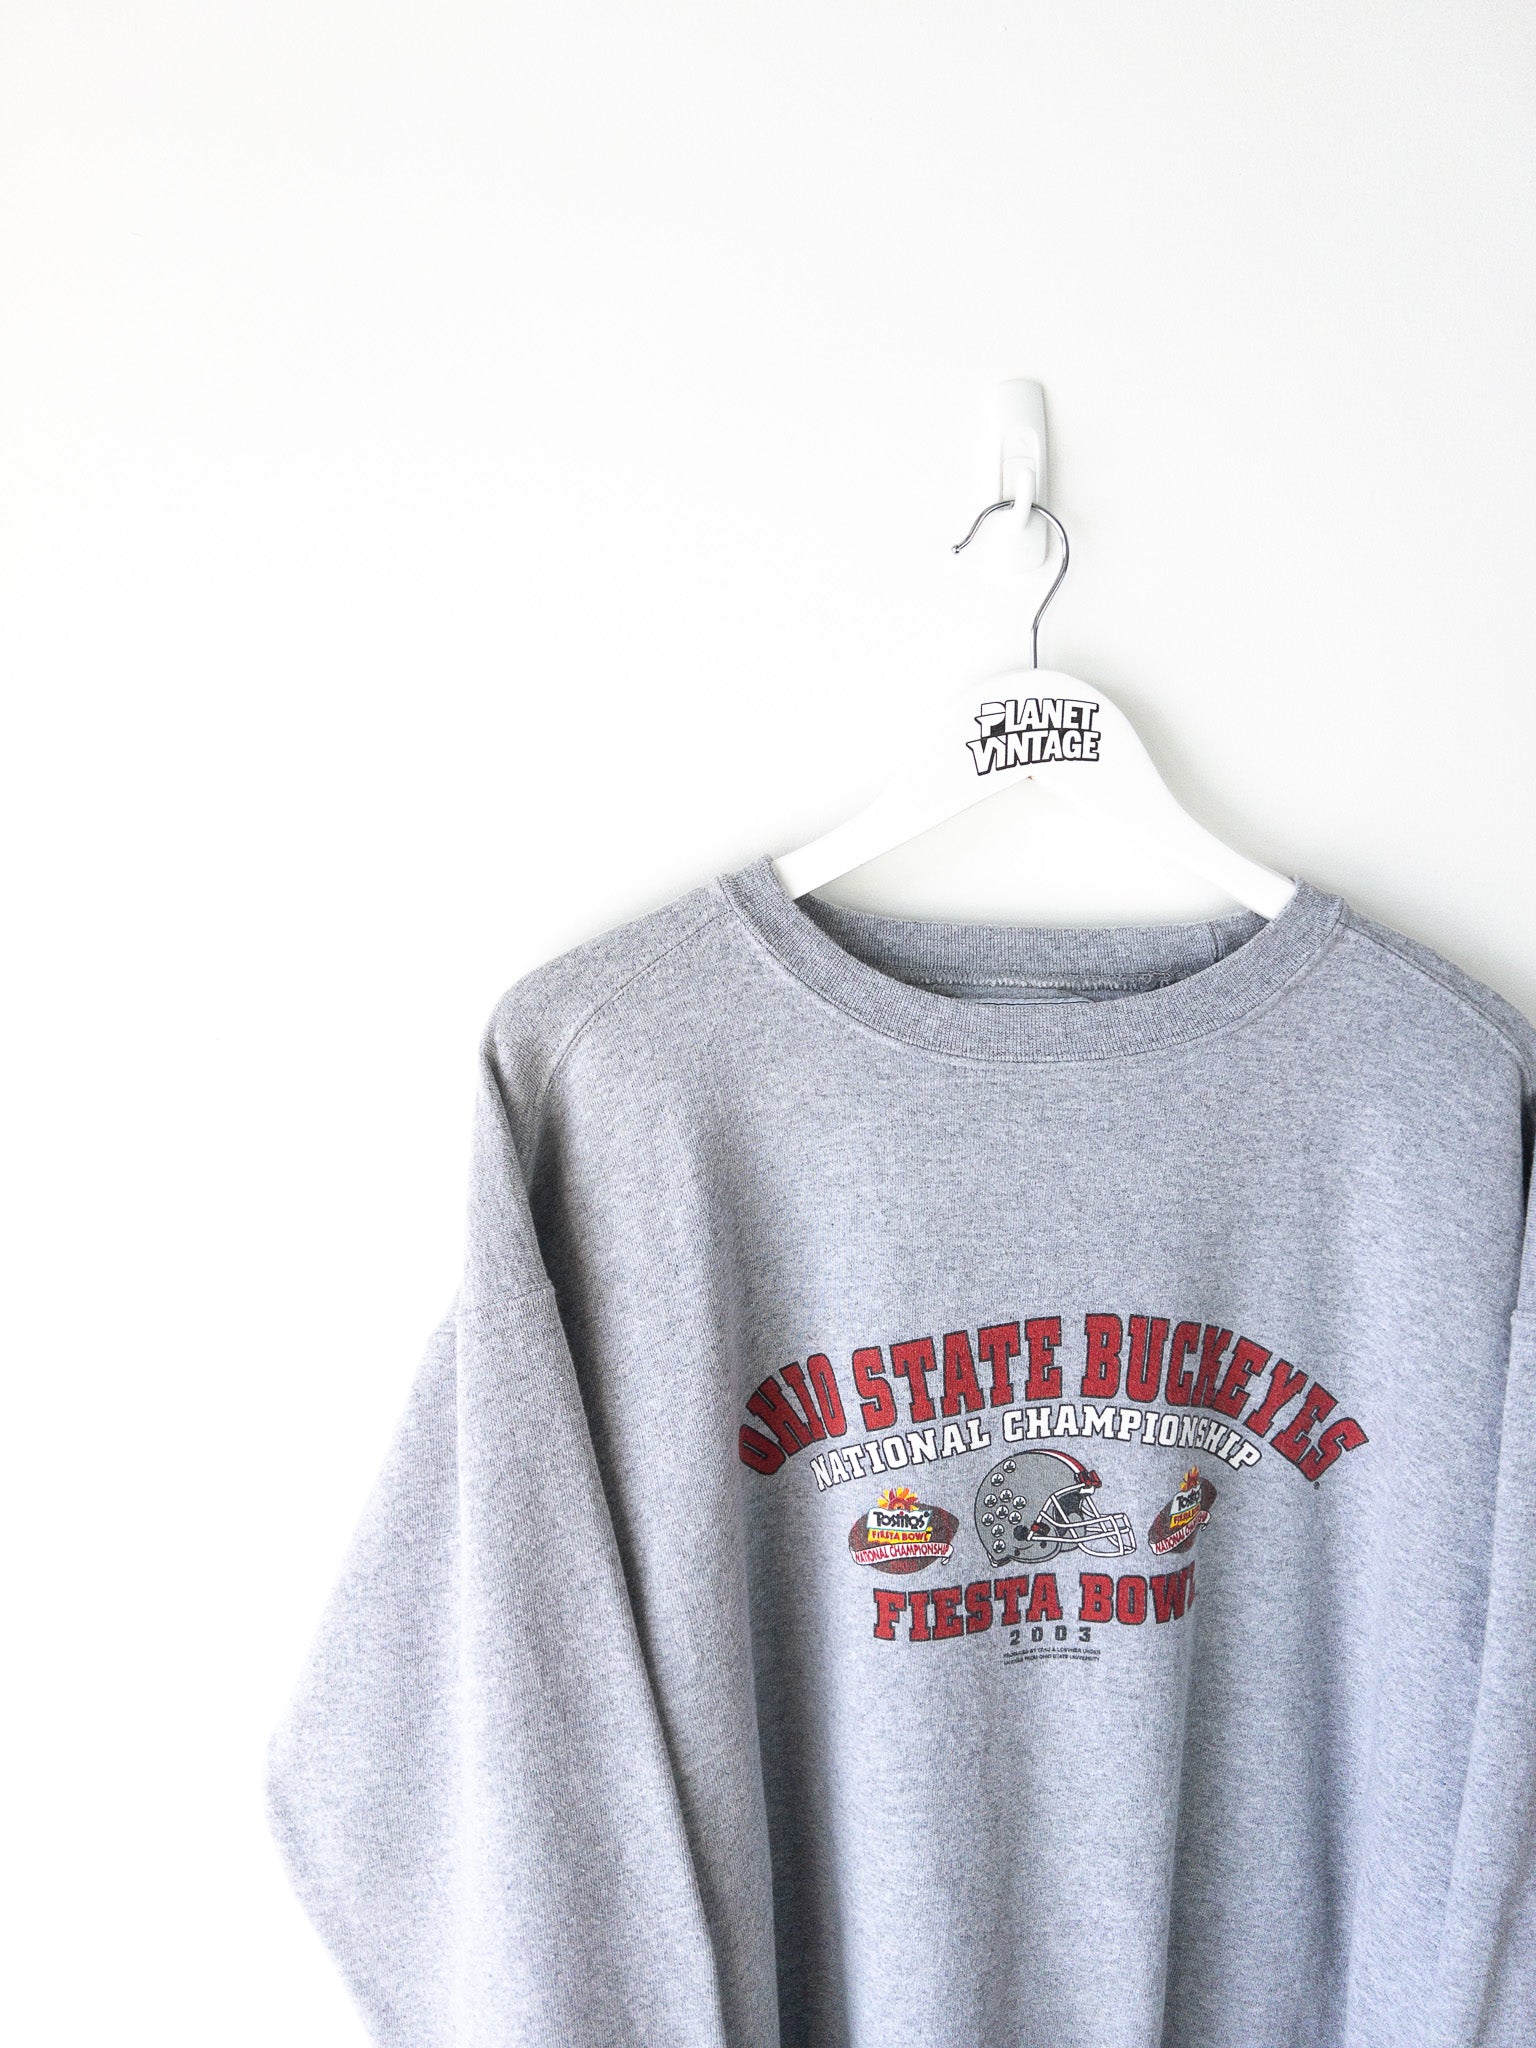 Vintage Ohio State Buckeyes Championship Sweatshirt (XL)